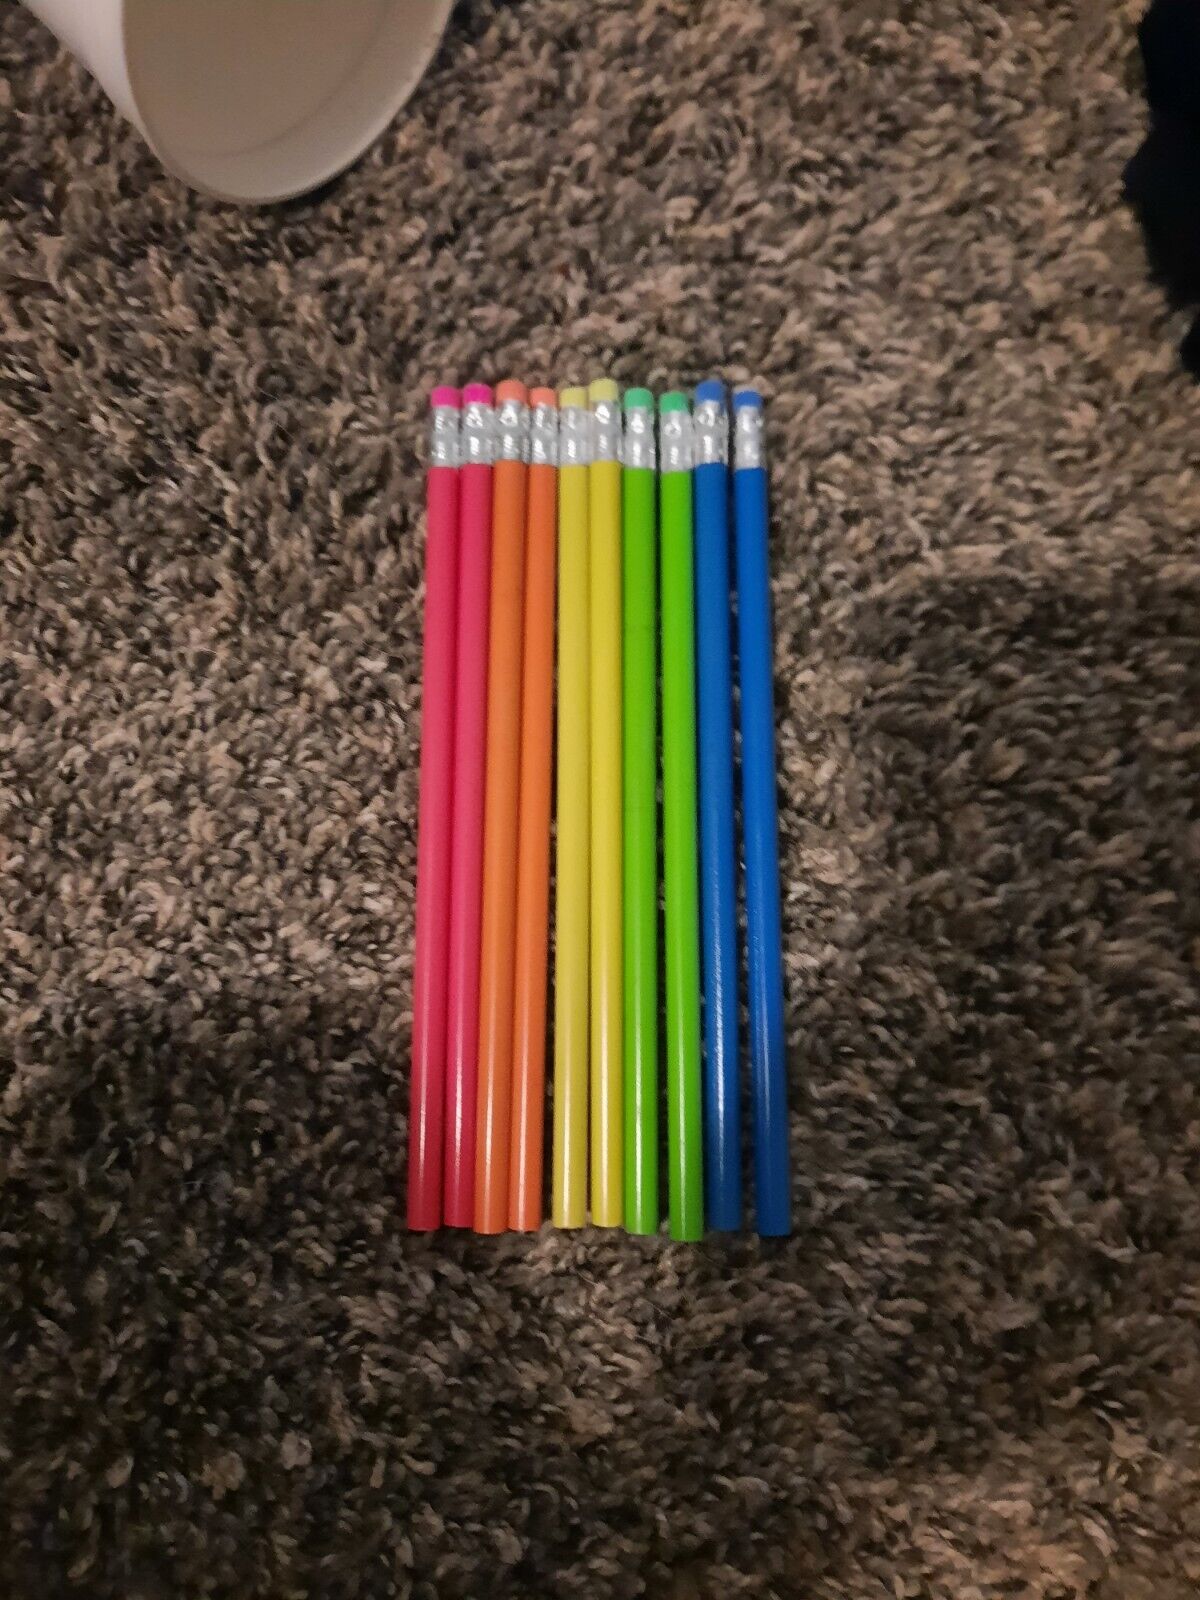 10 rainbow pencils 2 pink, 2 orange, 2 yellow, 2 blue